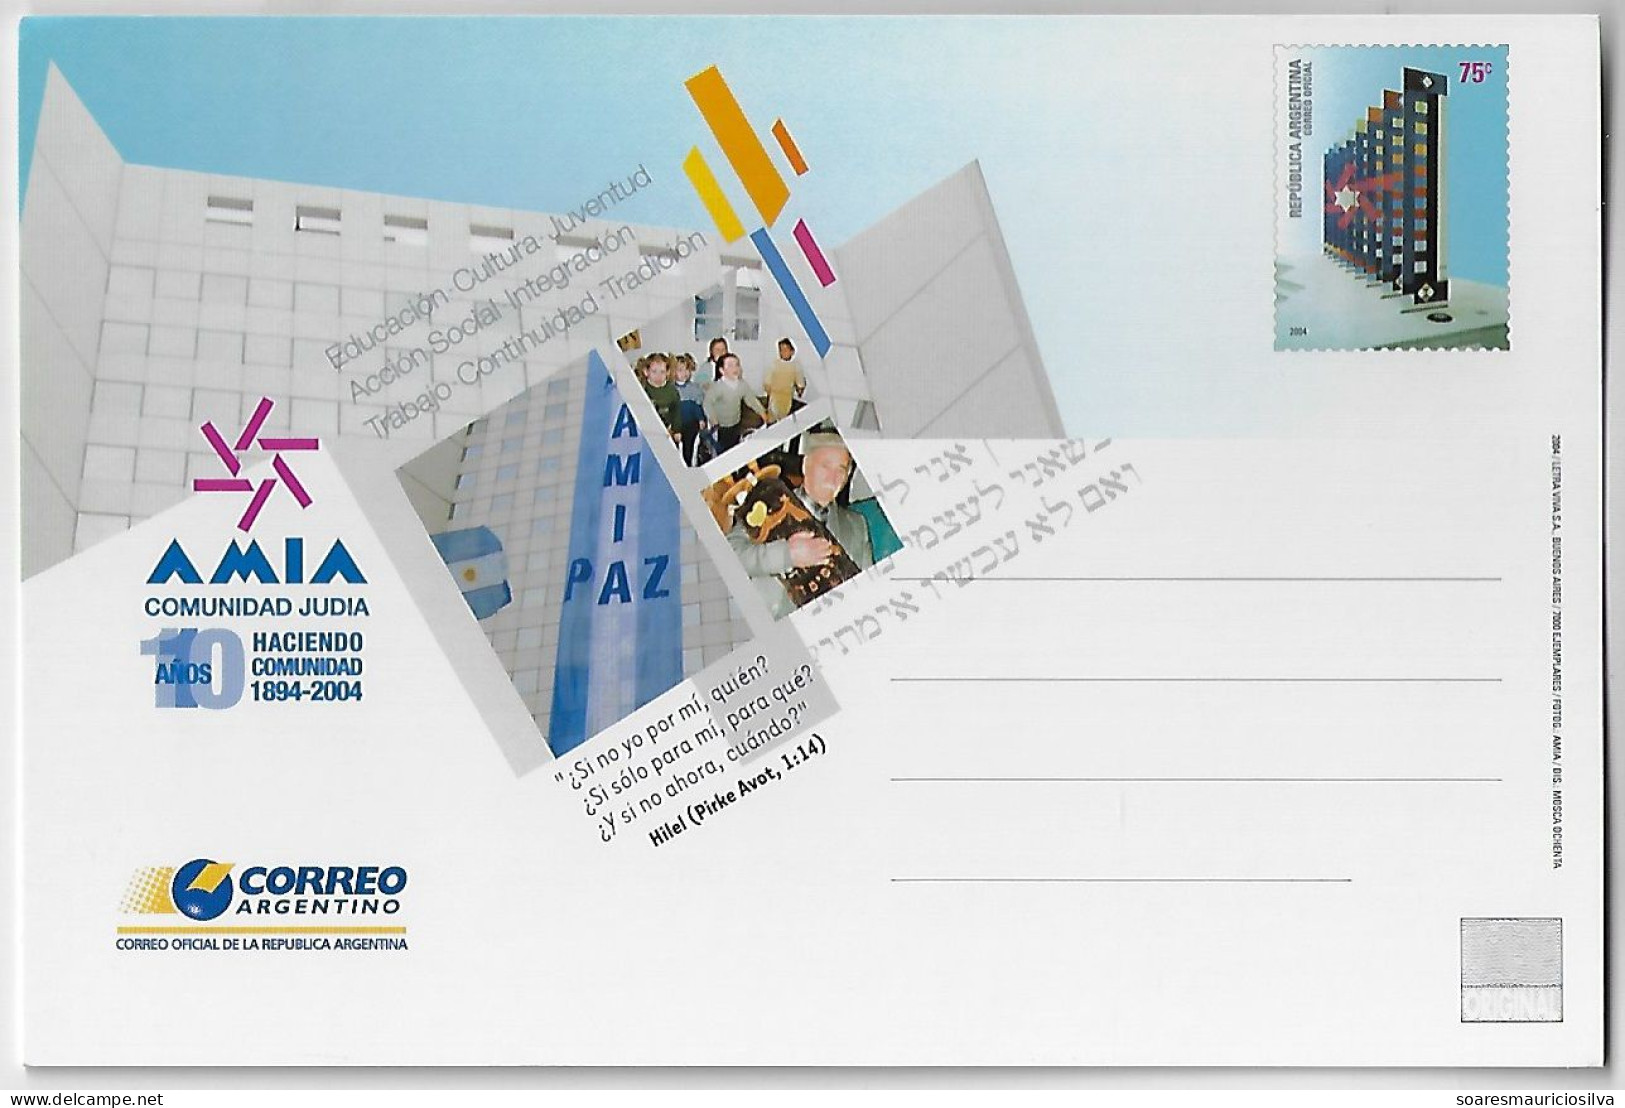 Argentina 2004 Postal Stationery Card AMIA Argentine Israeli Mutual Association Jewish Community Unused - Postal Stationery